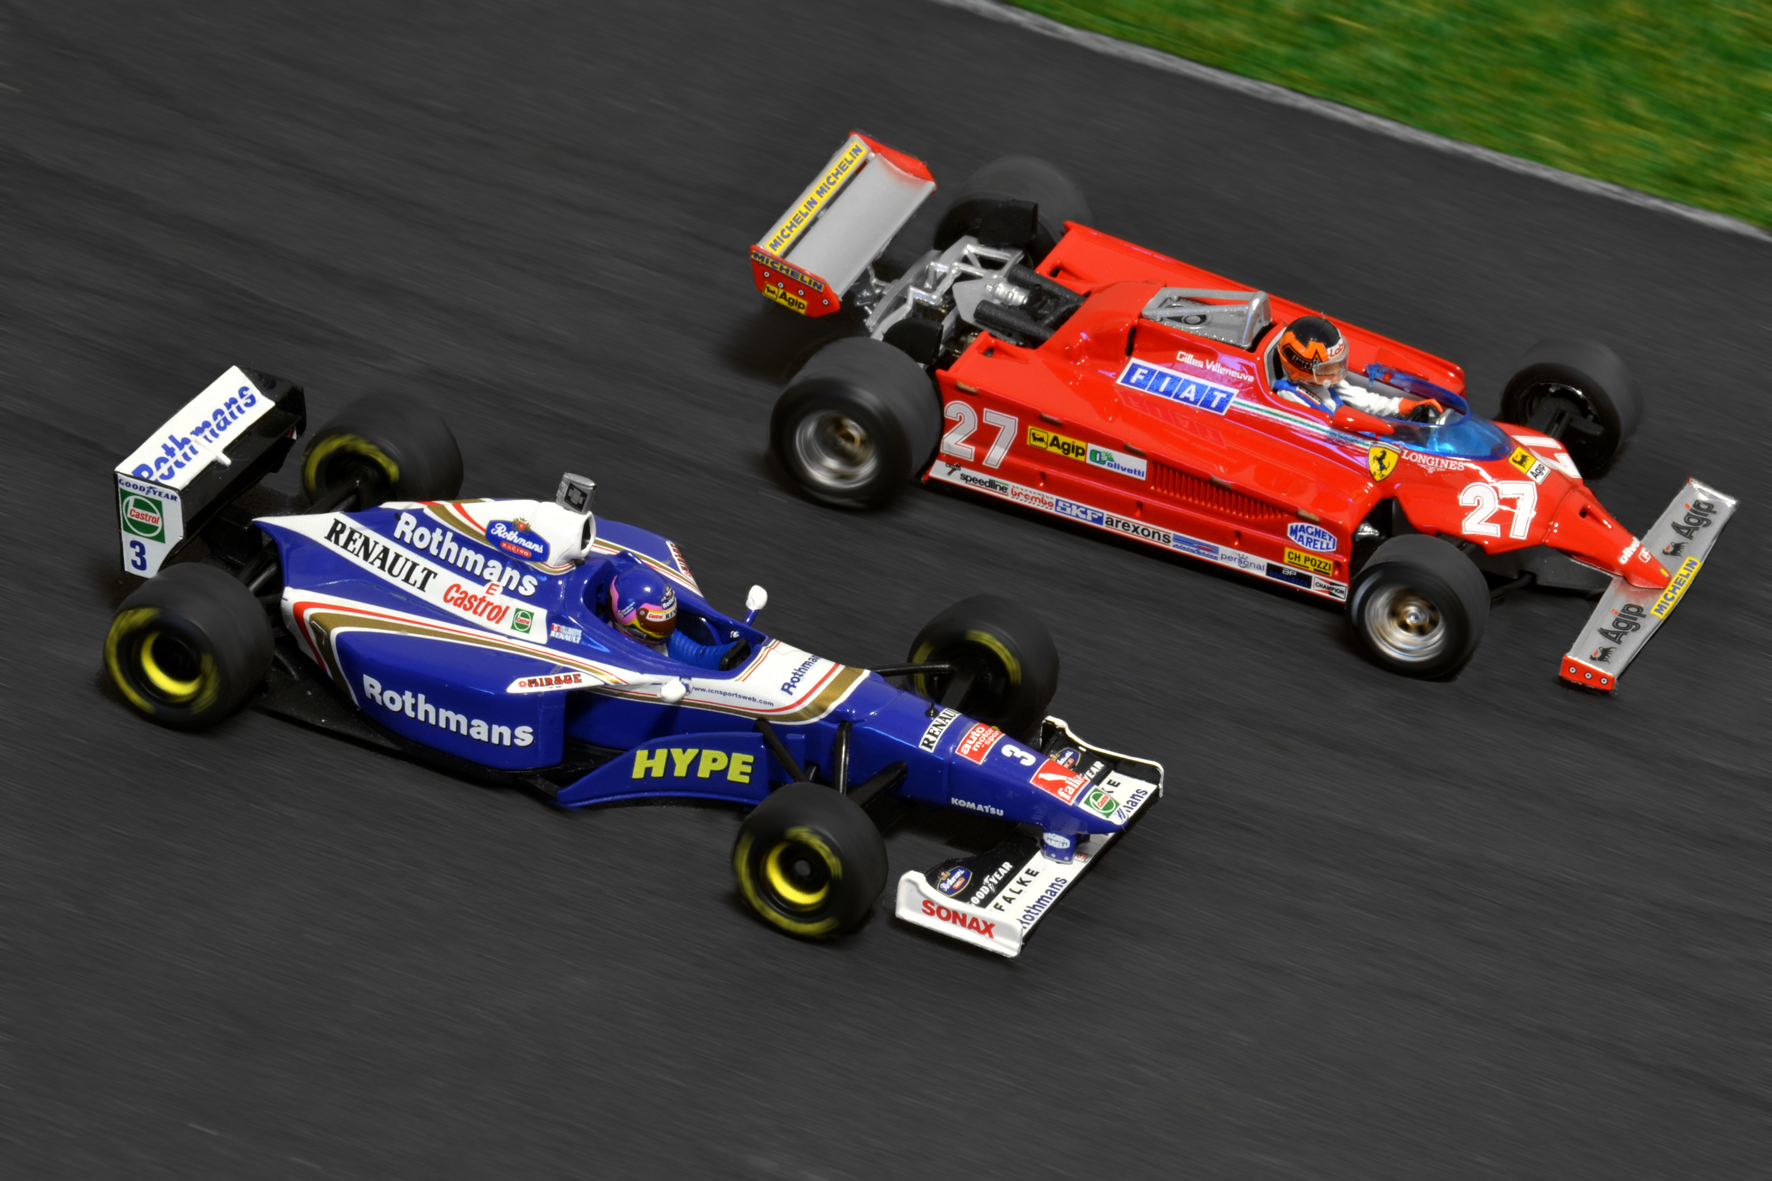 Gilles & Jacques Villeneuve - Ferrari 126CK 1981 & Williams FW19 1997 - Brumm & Minichamps 1:43